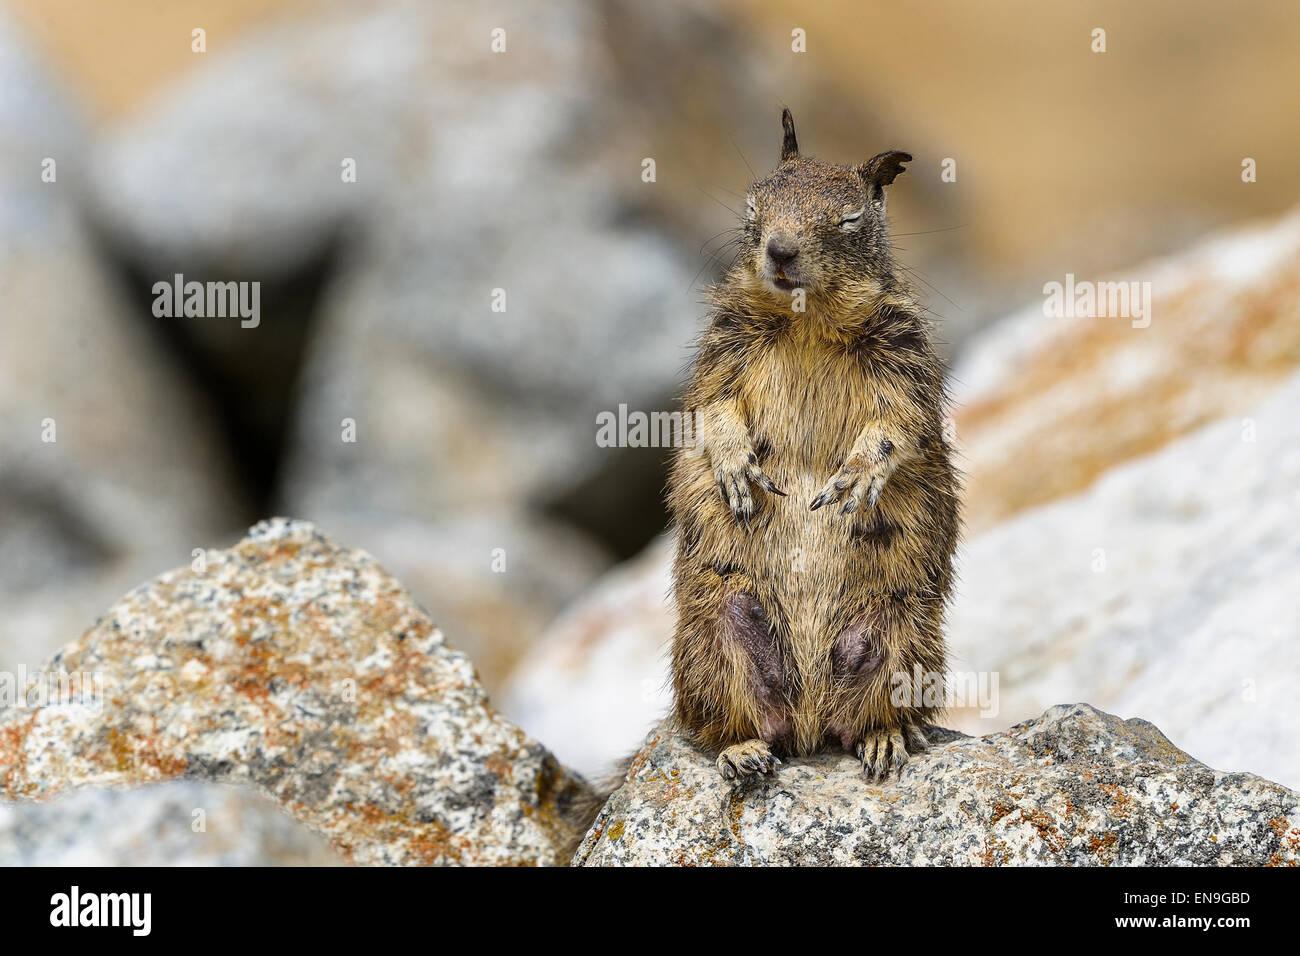 Kalifornien Grundeichhörnchen, Spermophilus beecheyi Stockfoto